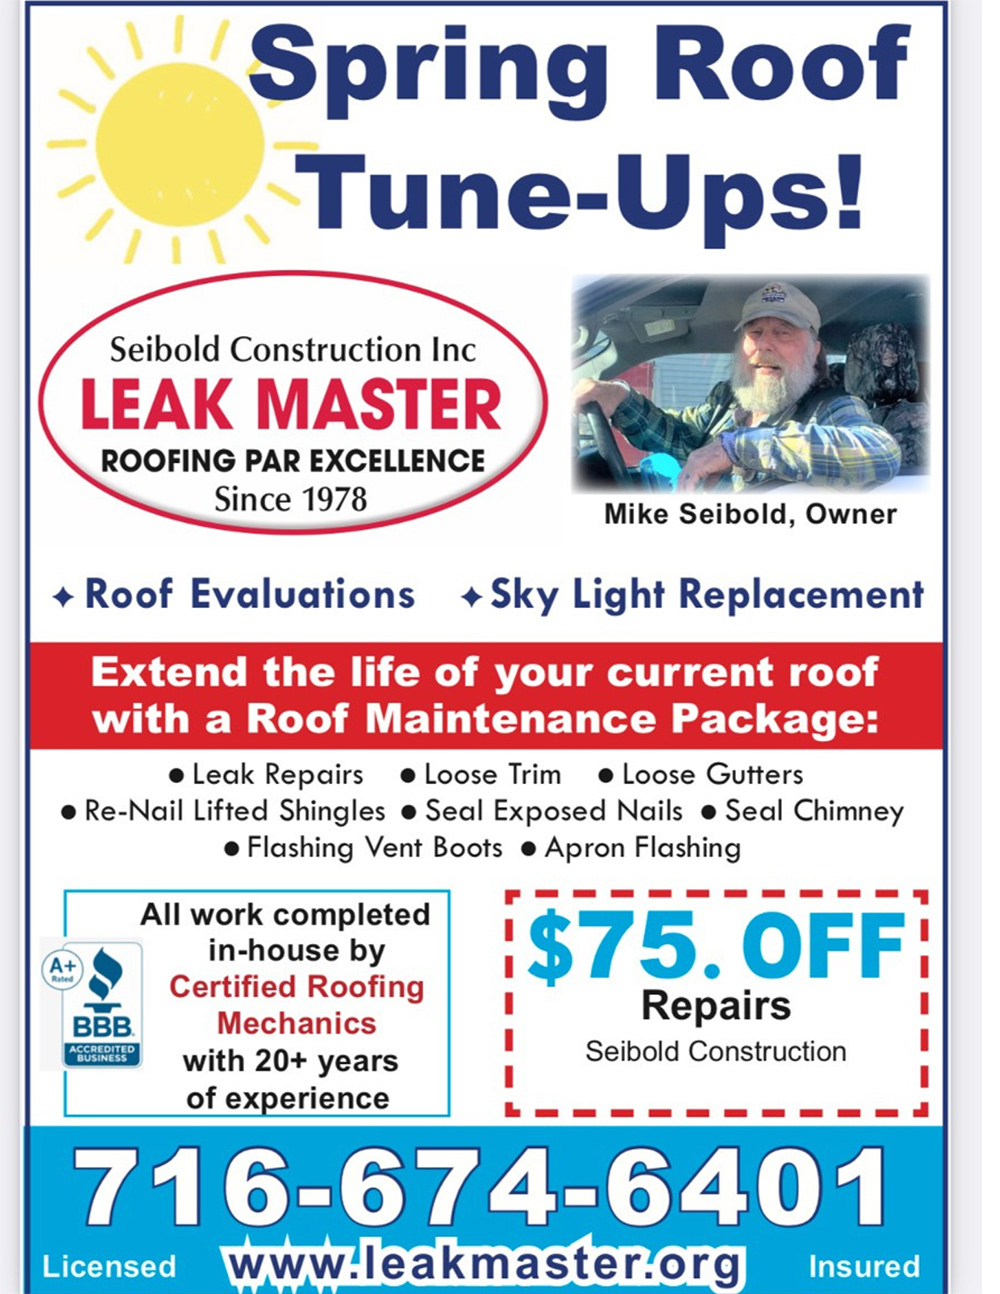 Leak Master Spring Roof Tunes Up